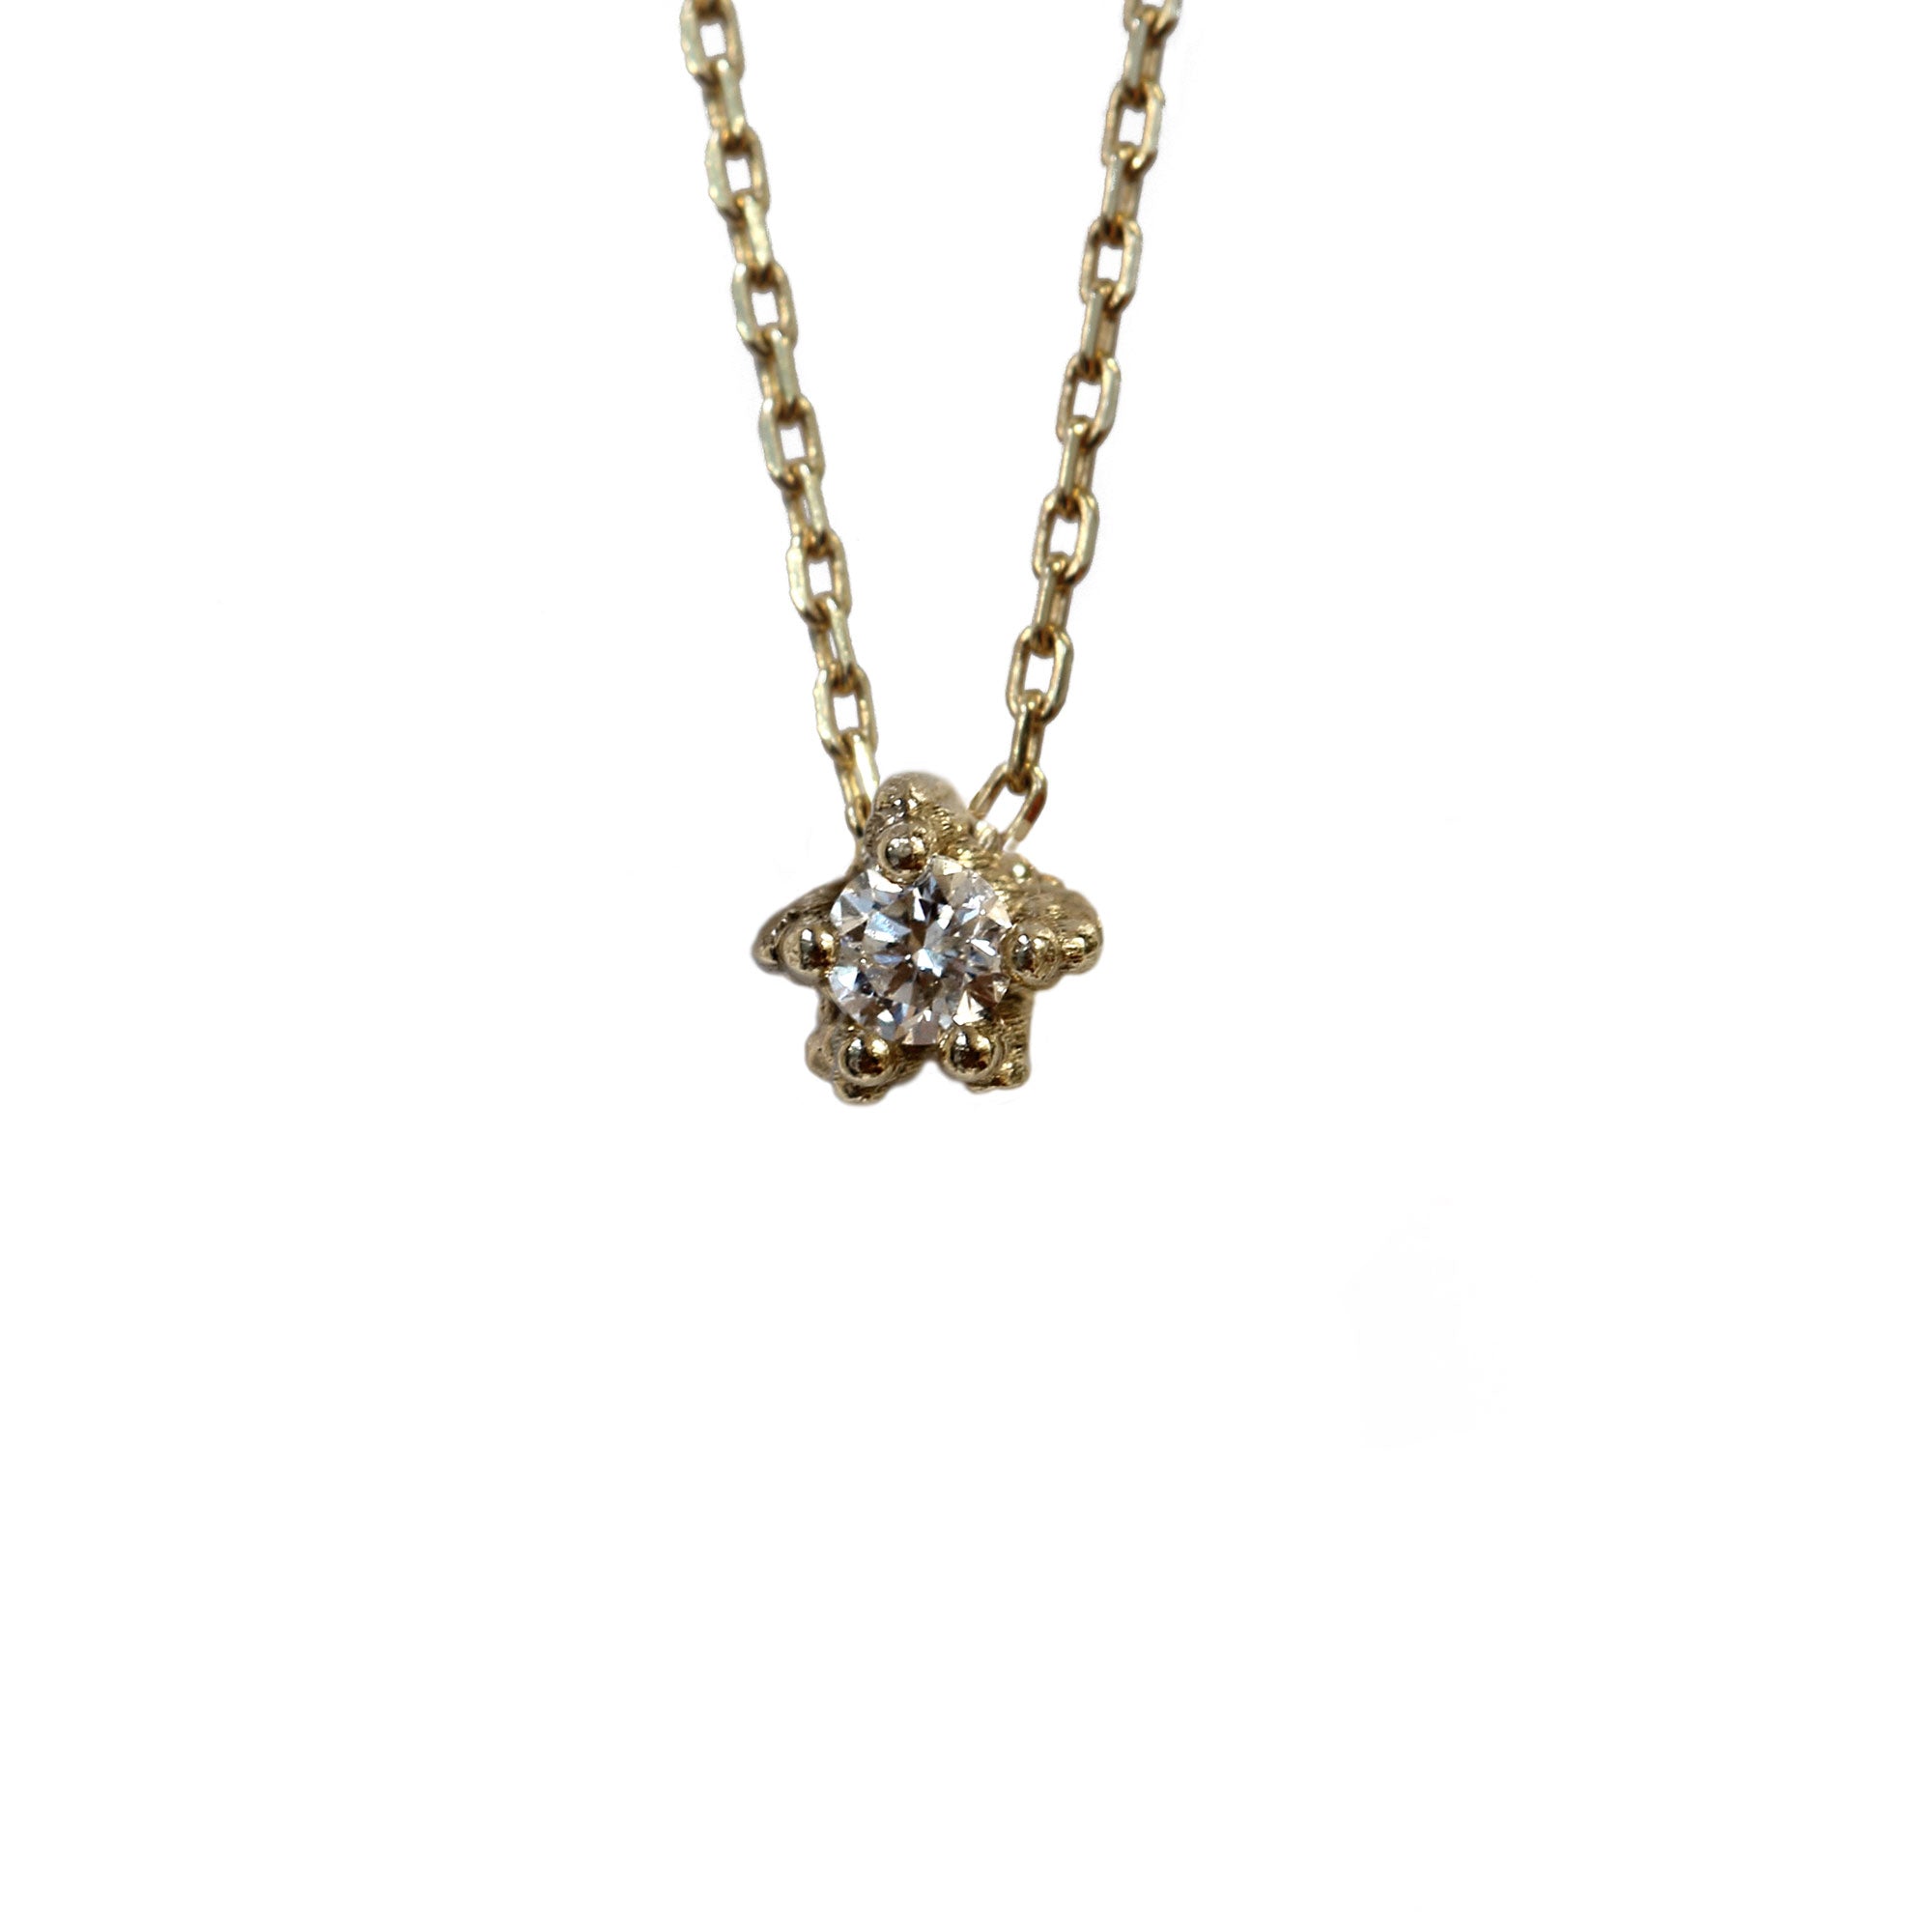 Tiny diamond set textured gold necklace on white background